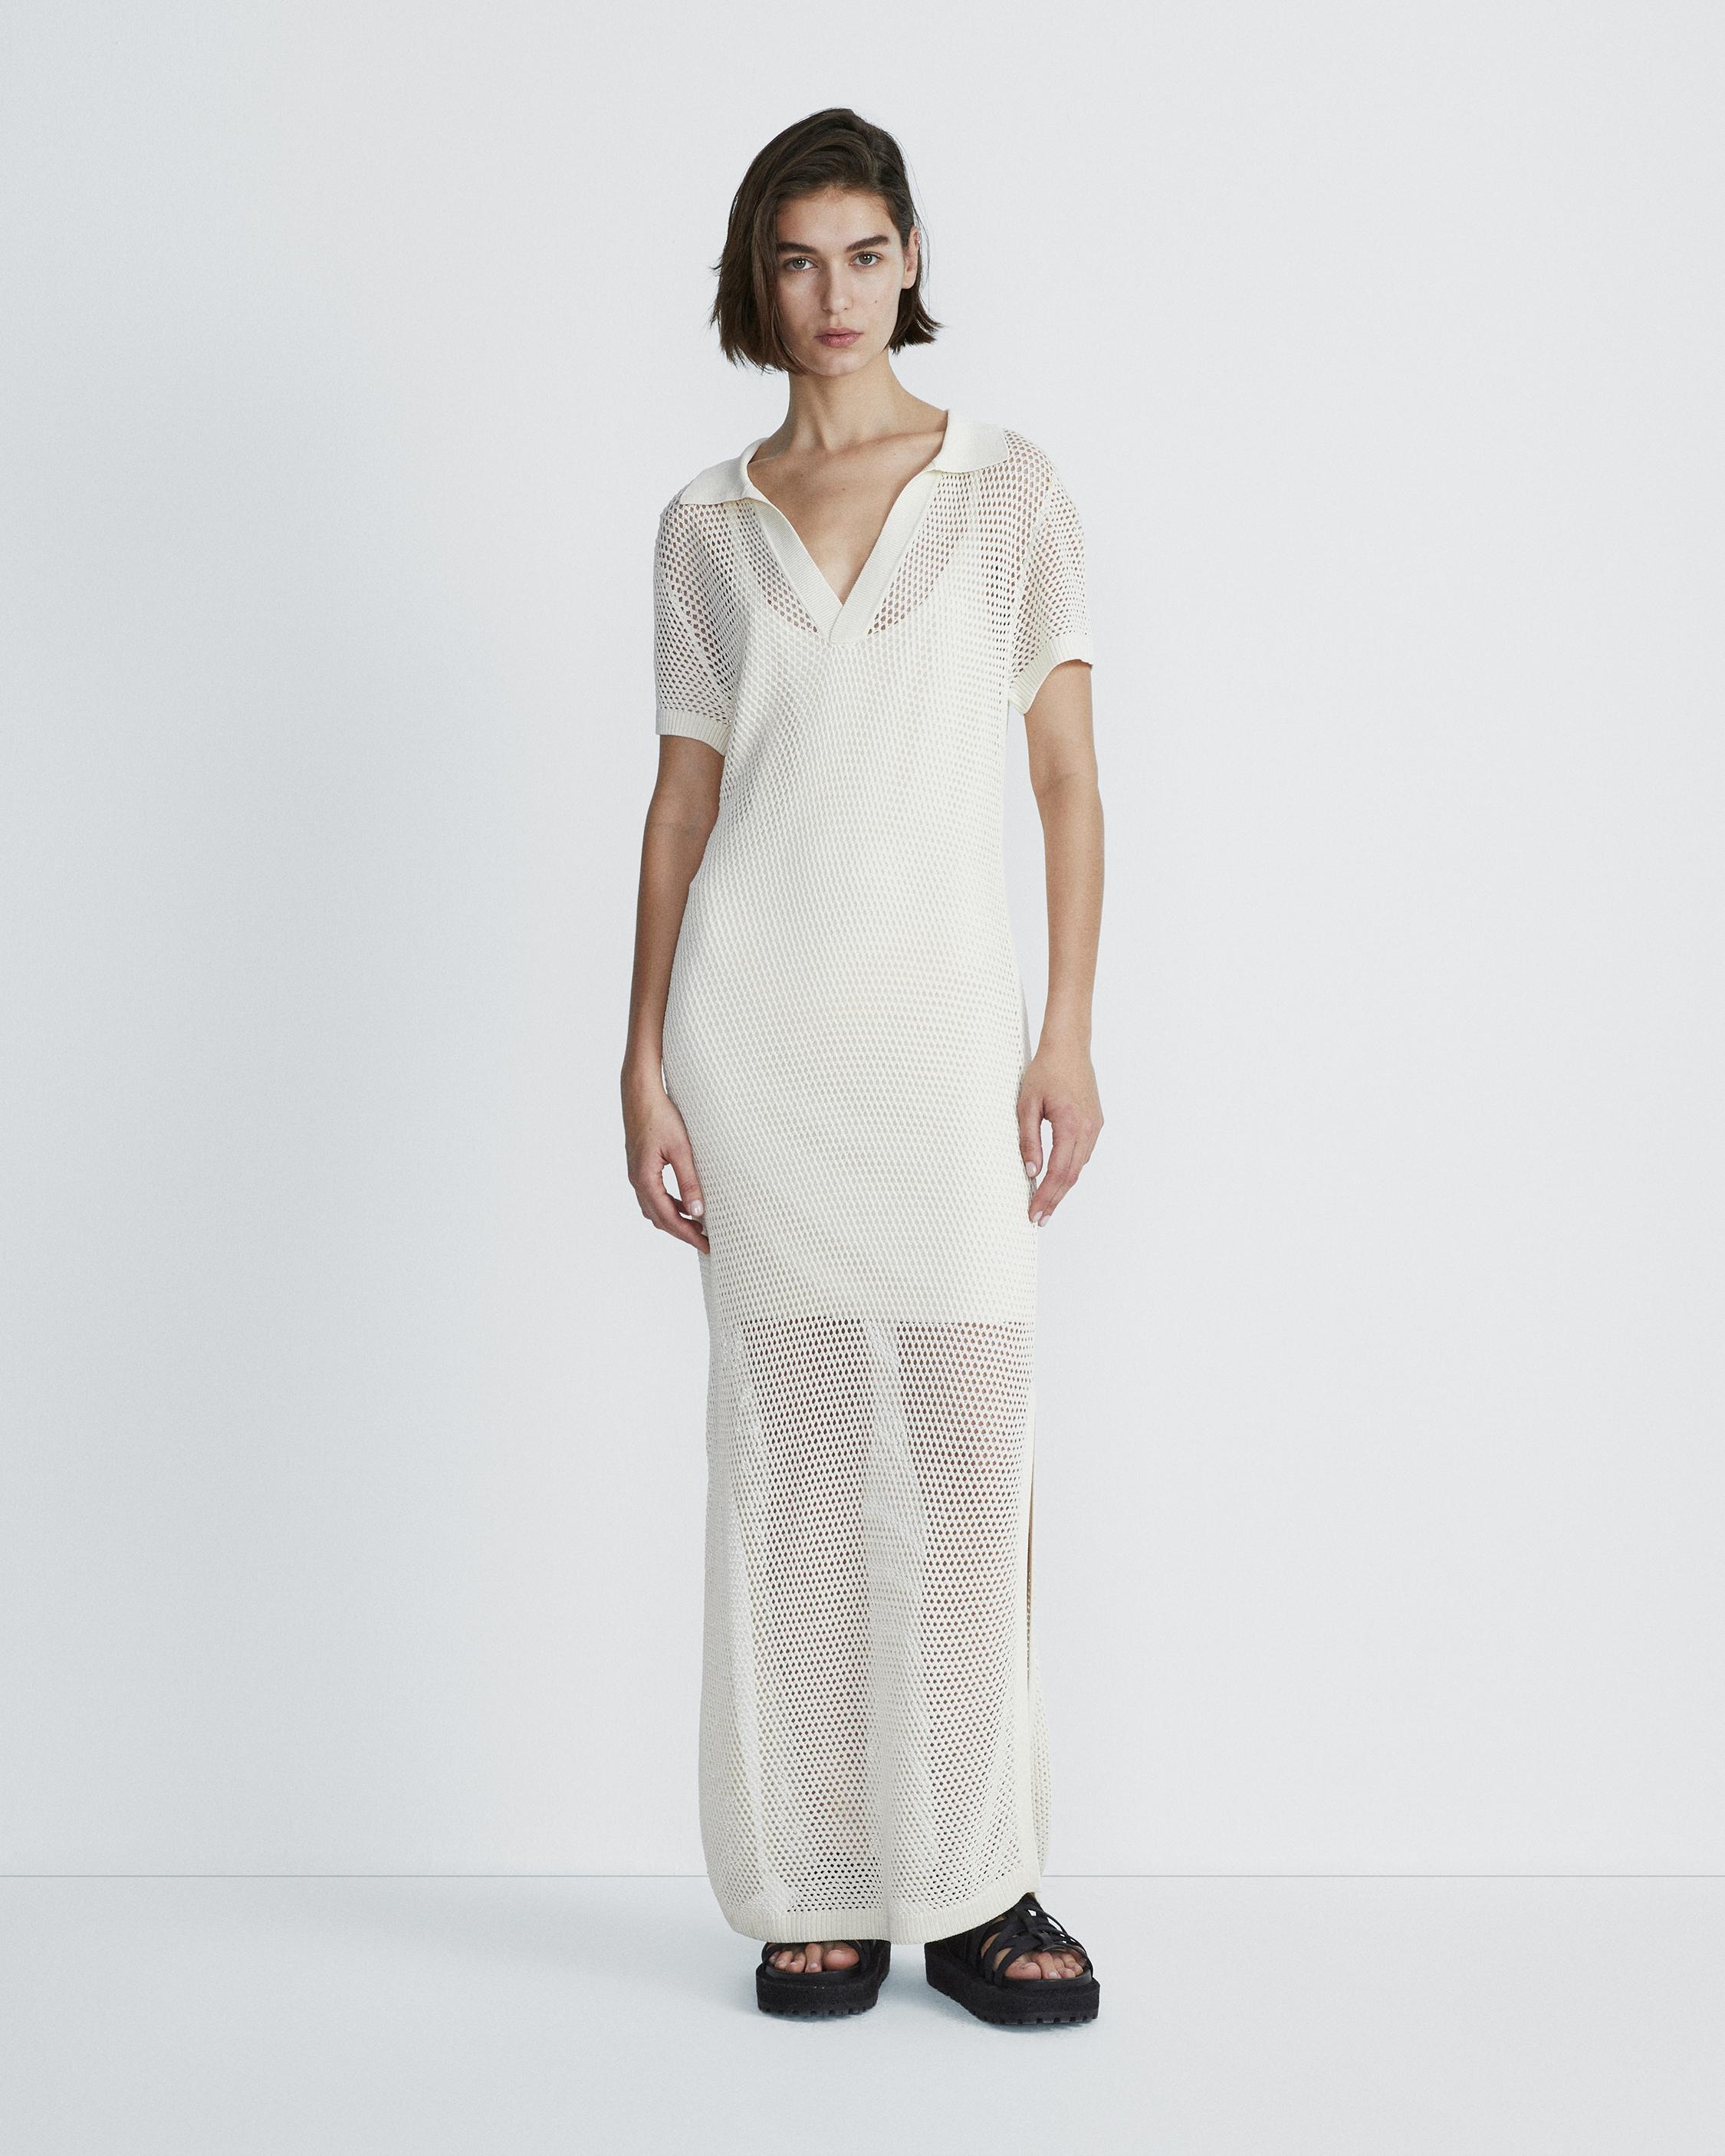 Leah Polo Viscose Dress
Maxi Dress - 1